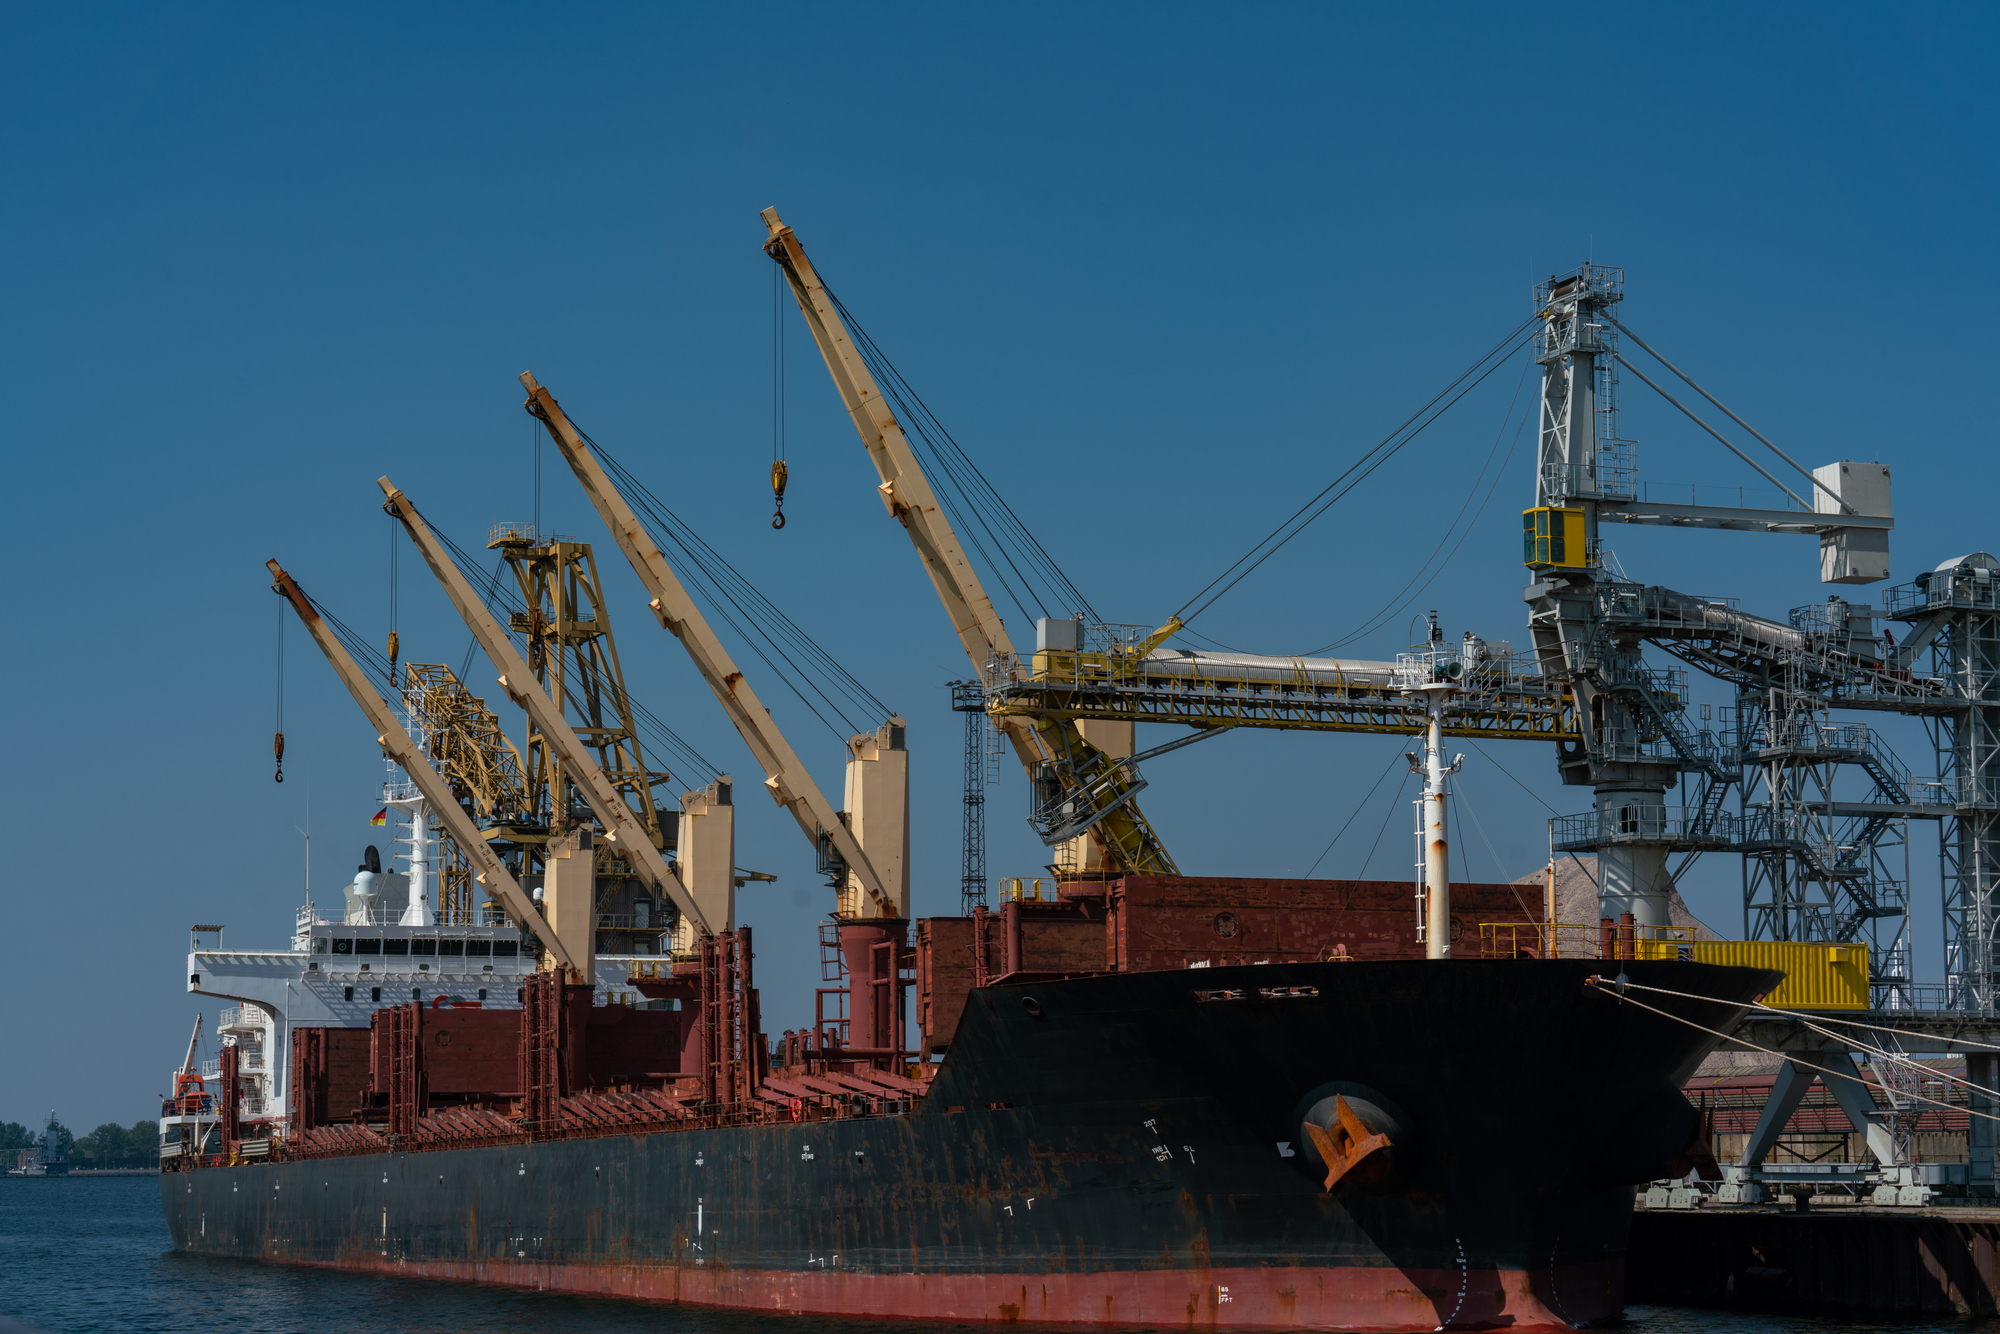 dockside cranes at the industrial harbour in Rostock